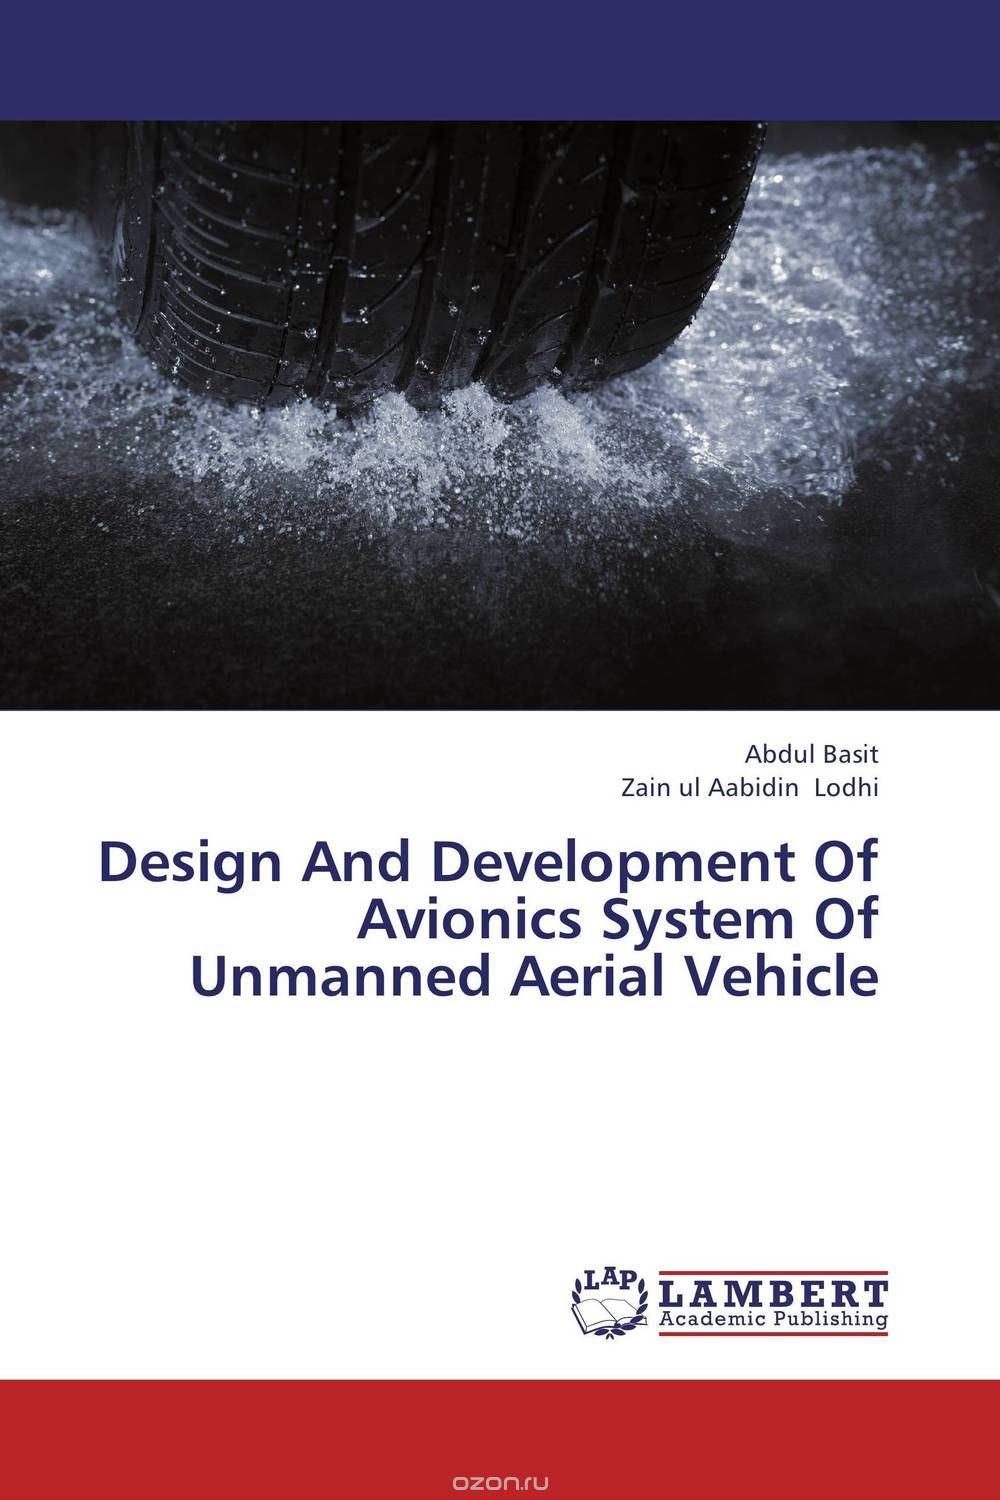 Скачать книгу "Design And Development Of Avionics System Of Unmanned Aerial Vehicle"